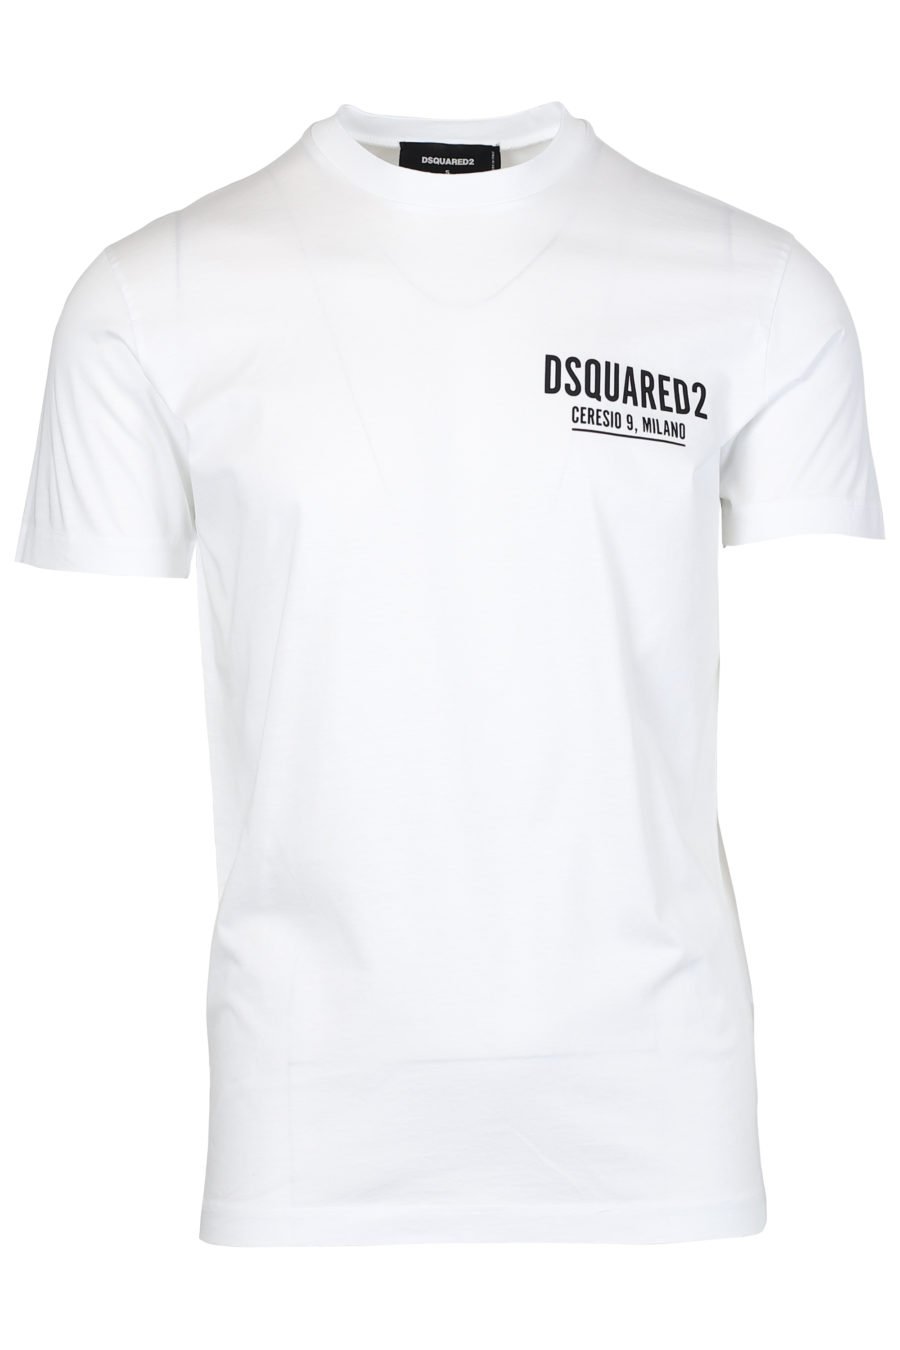 T-shirt blanc avec petit logo "Ceresio 9" - IMG 2435